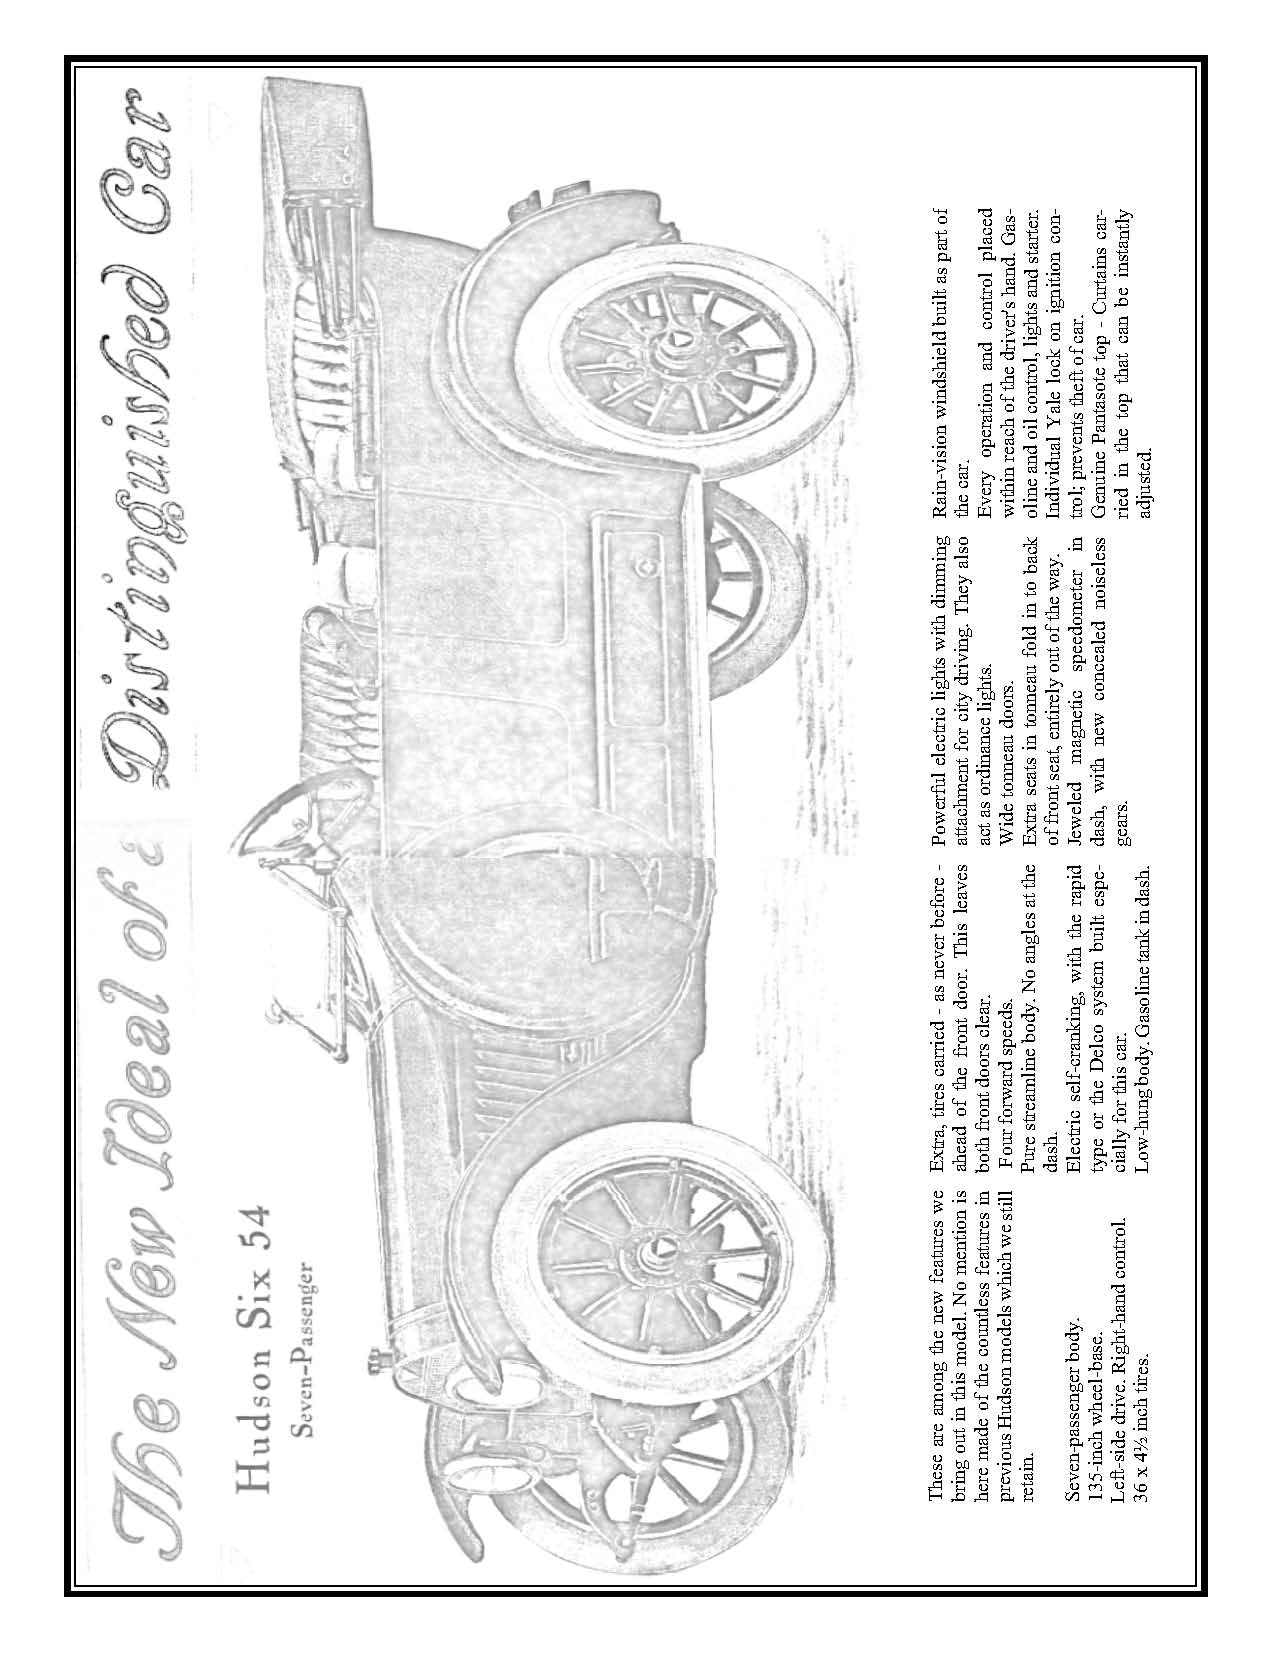 1915 Hudson Six-54 Info Book-08